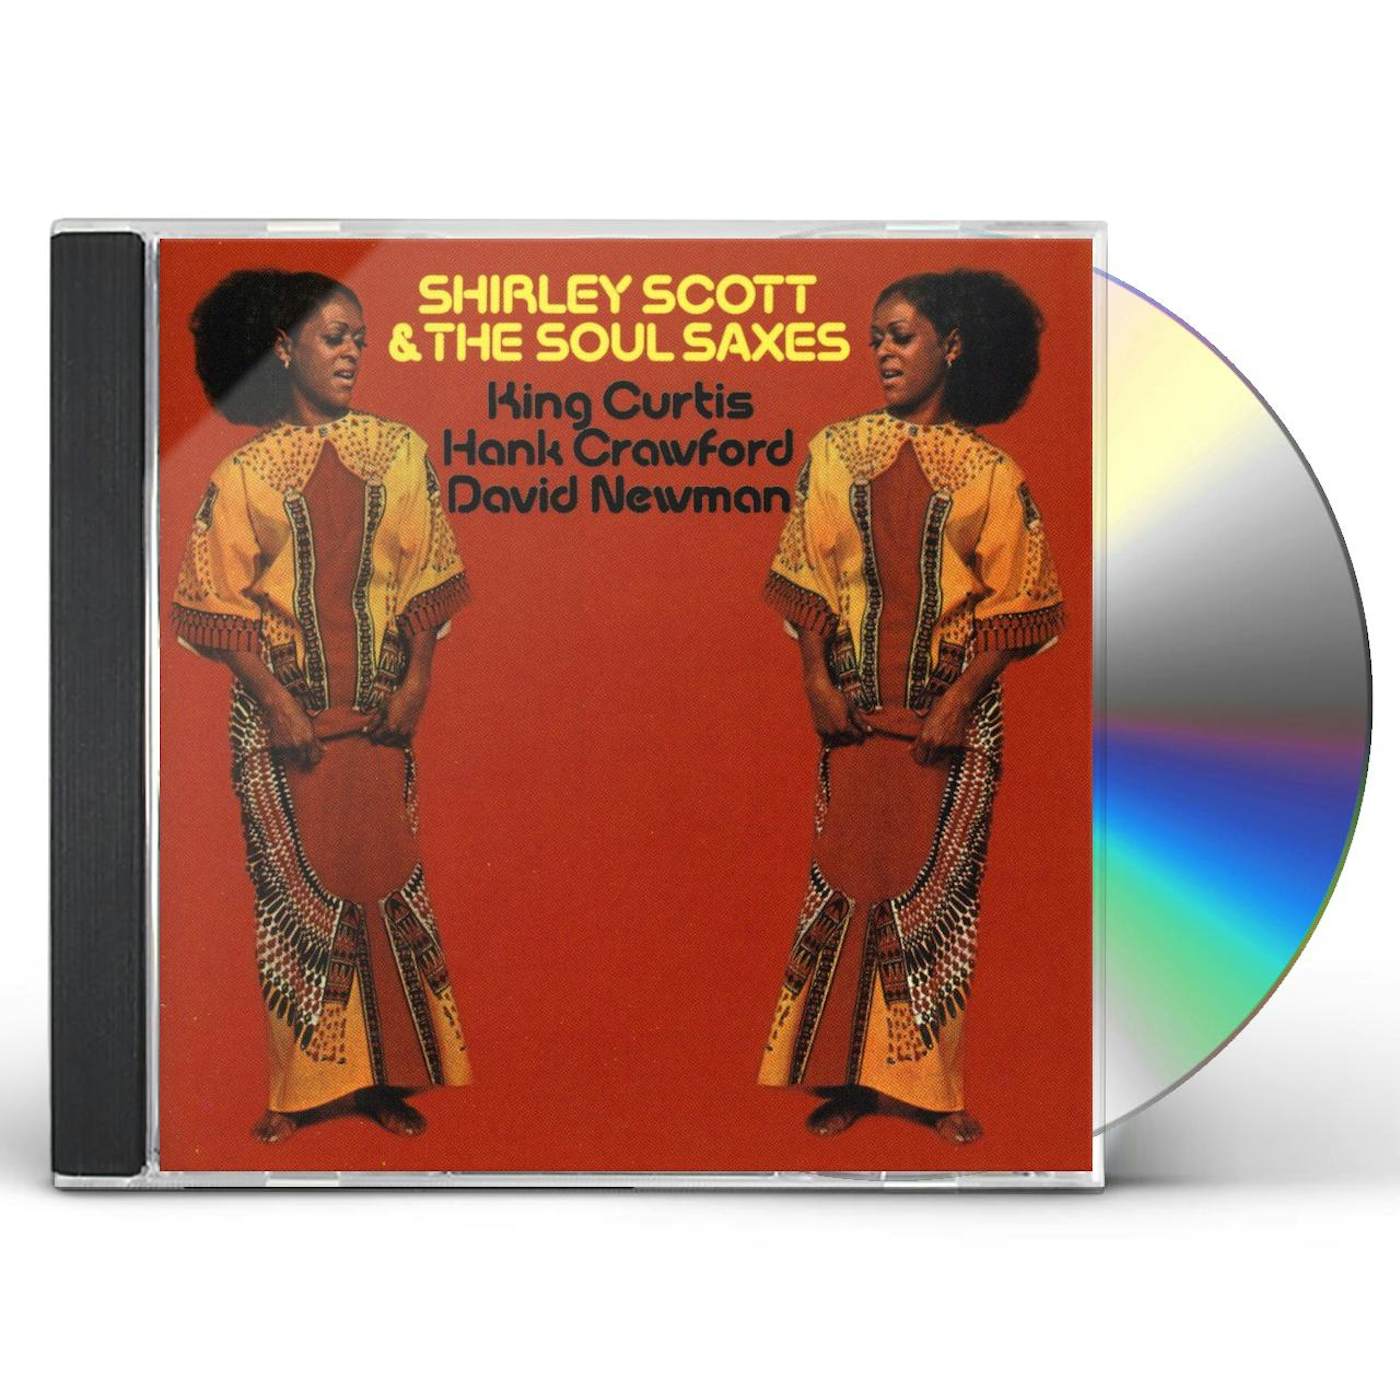 SHIRLEY SCOTT & SOUL SAXES CD